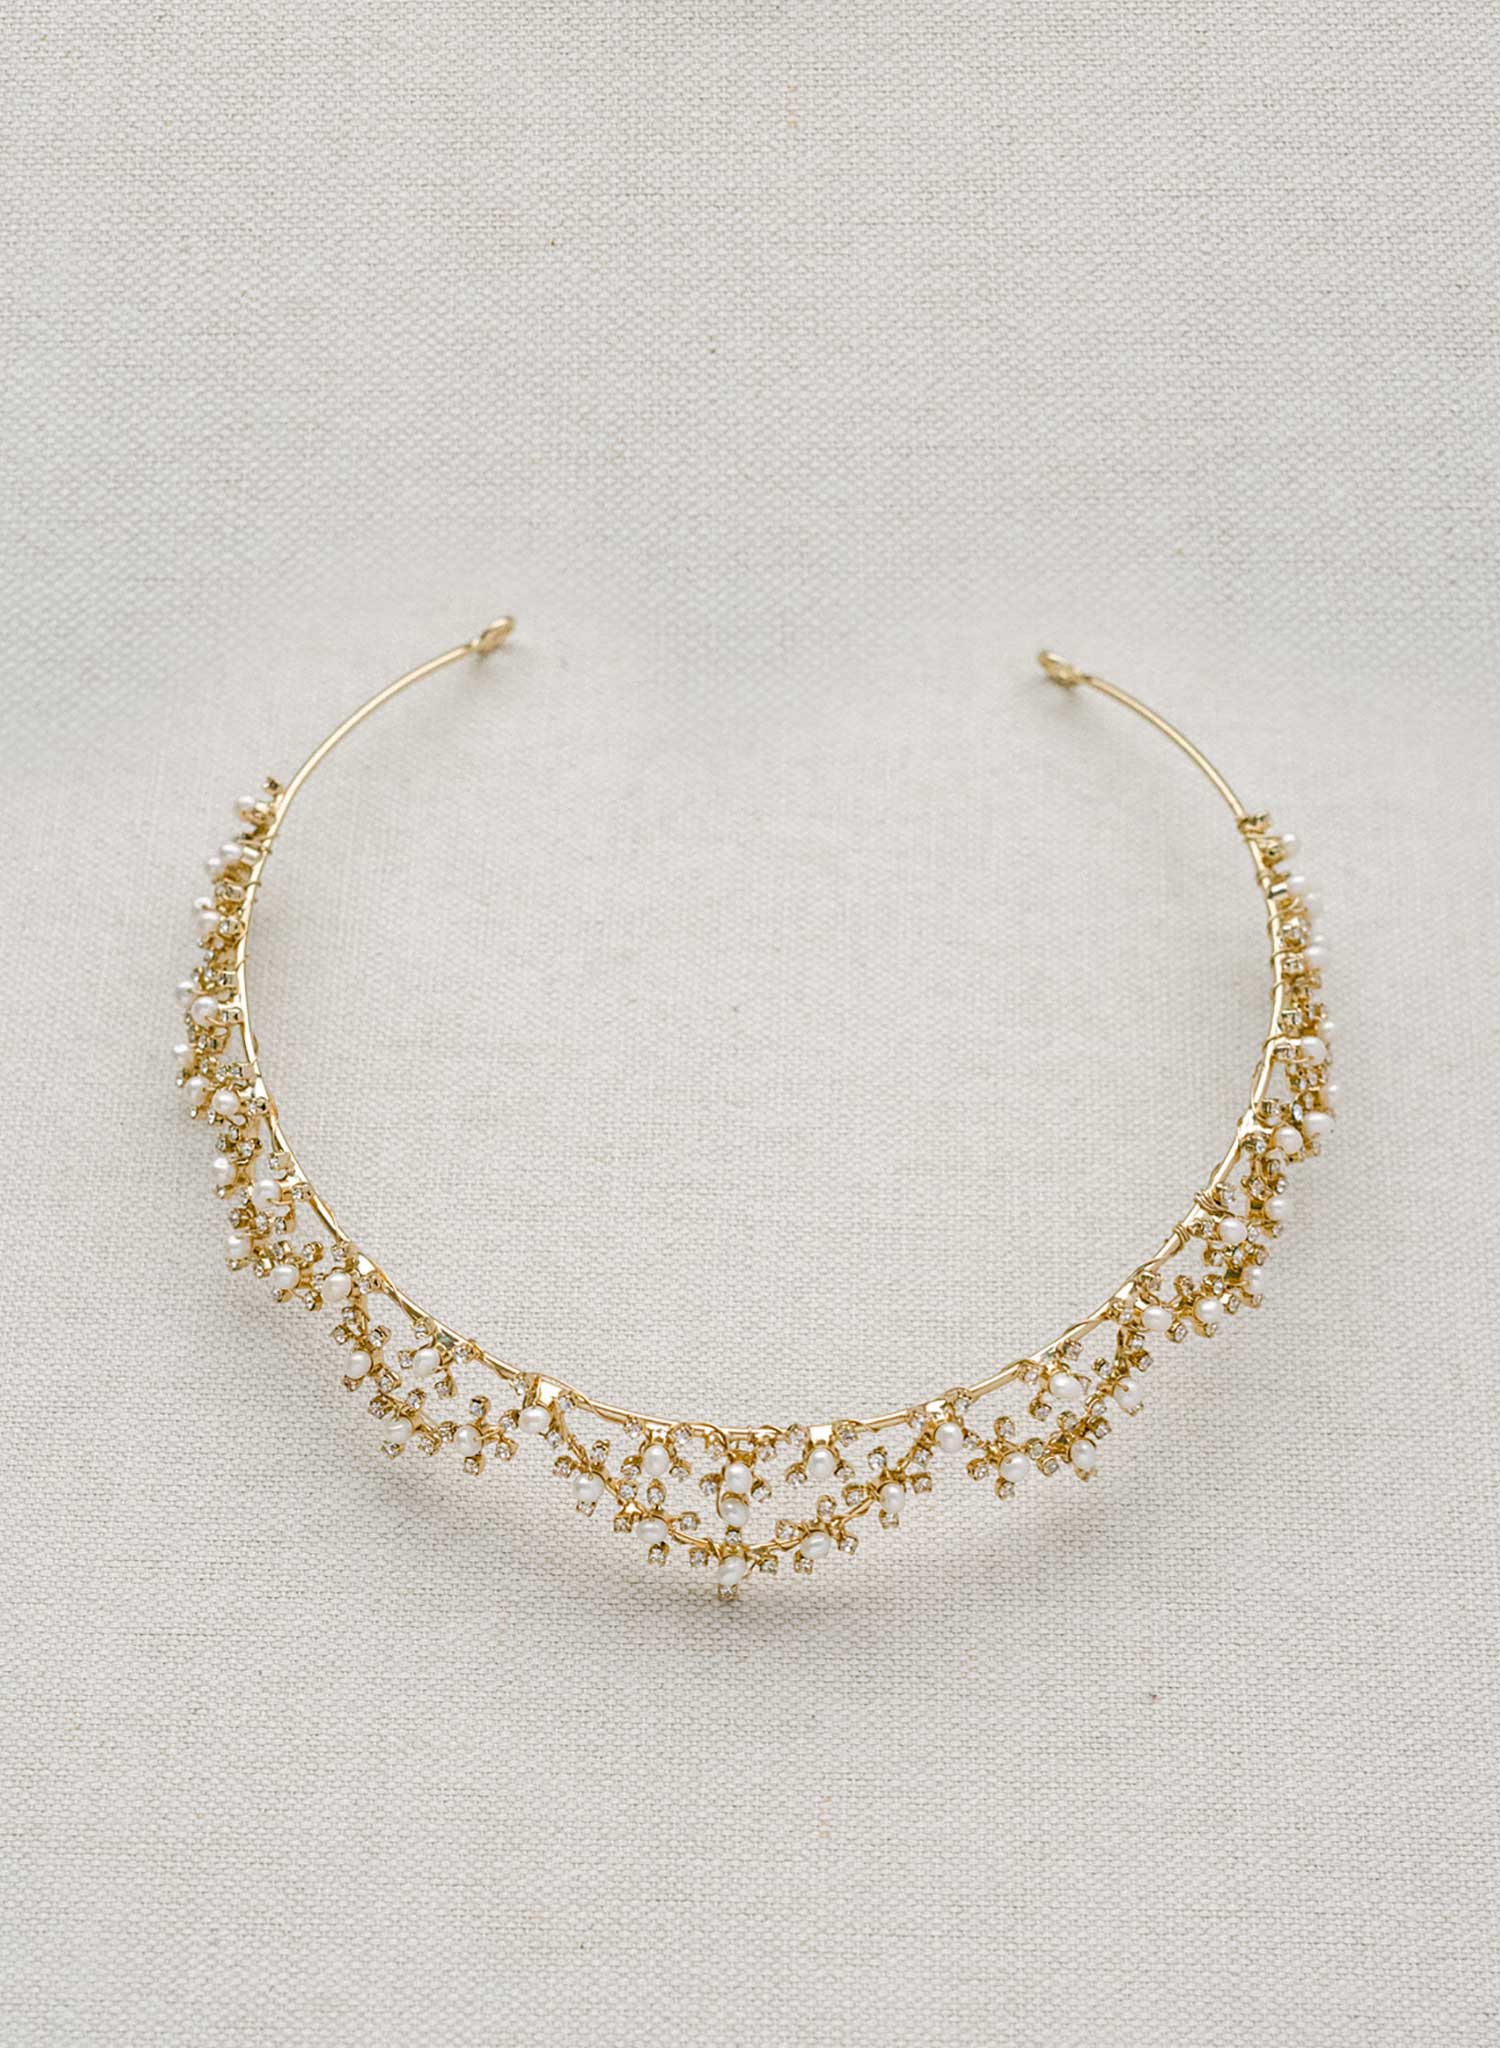 Tiny crystal and pearl burst tiara - Style #2414